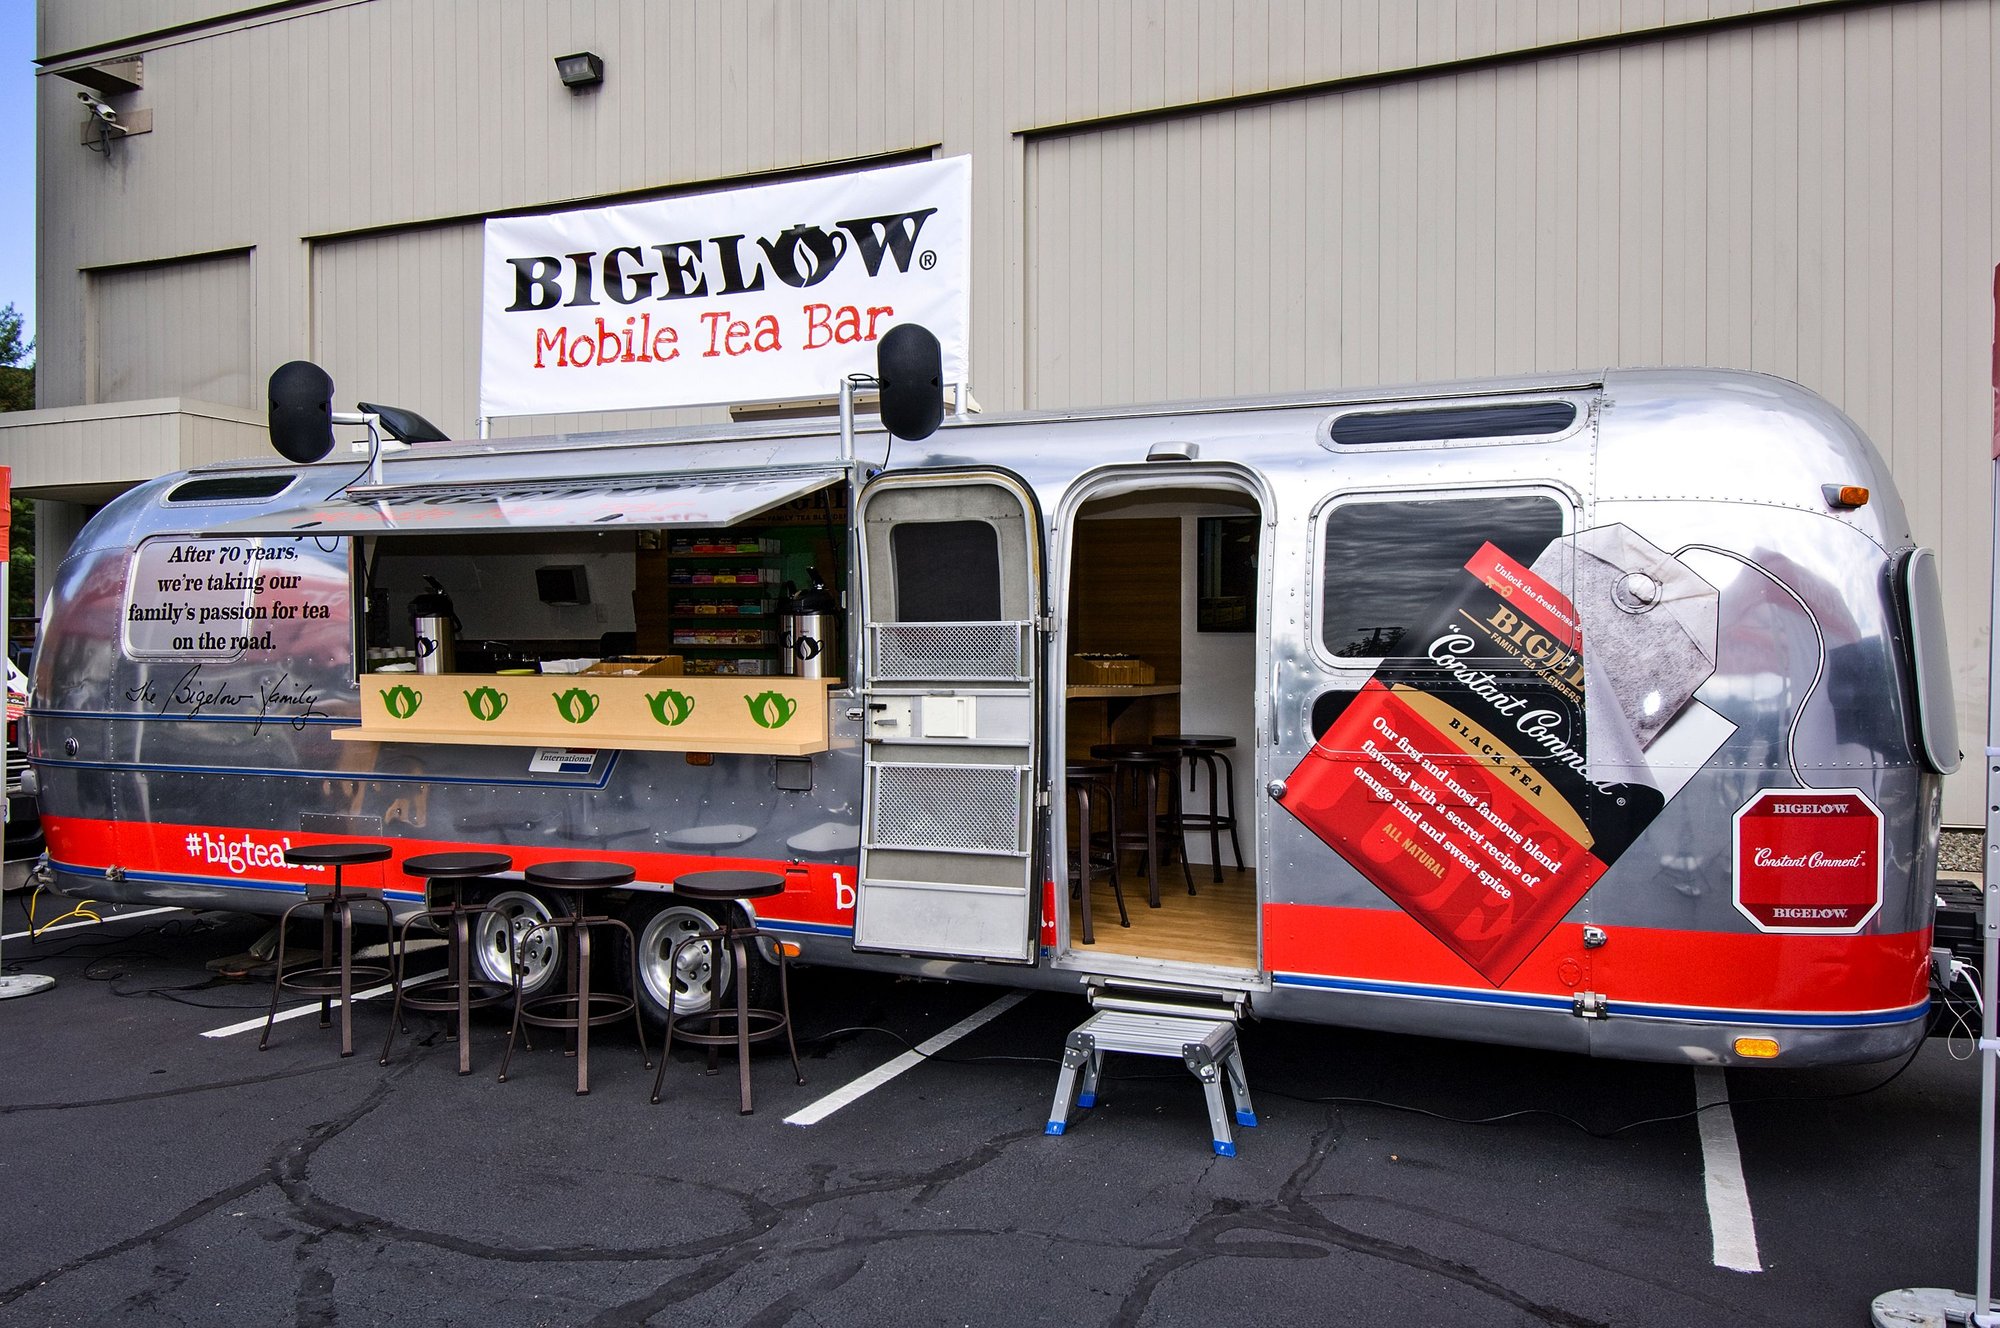 Outdoor Display Screens: Food Trucks & Promotional Vehicles